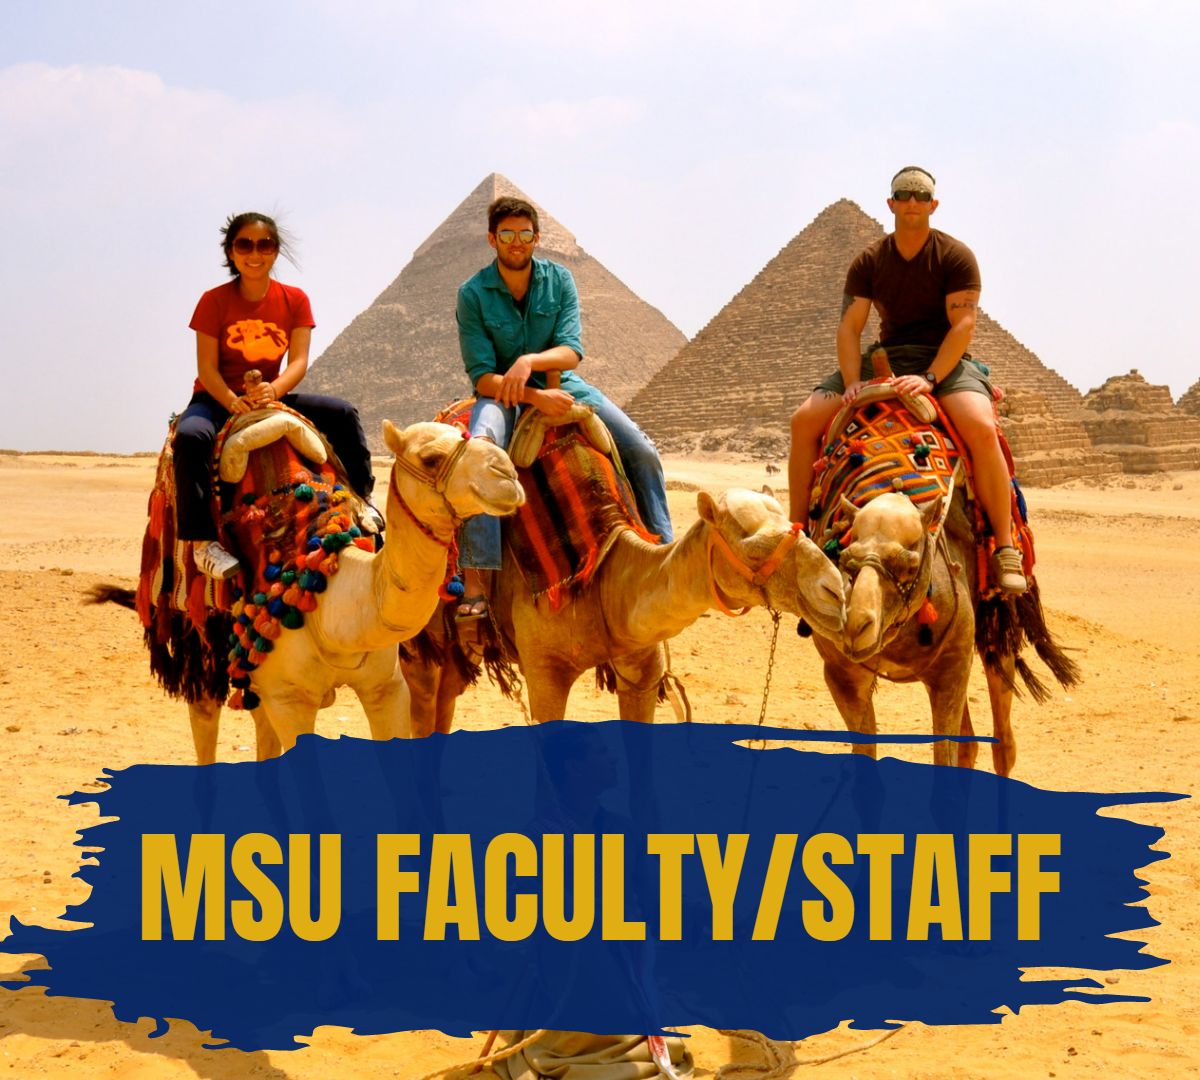 MSU Faculty/Staff Button